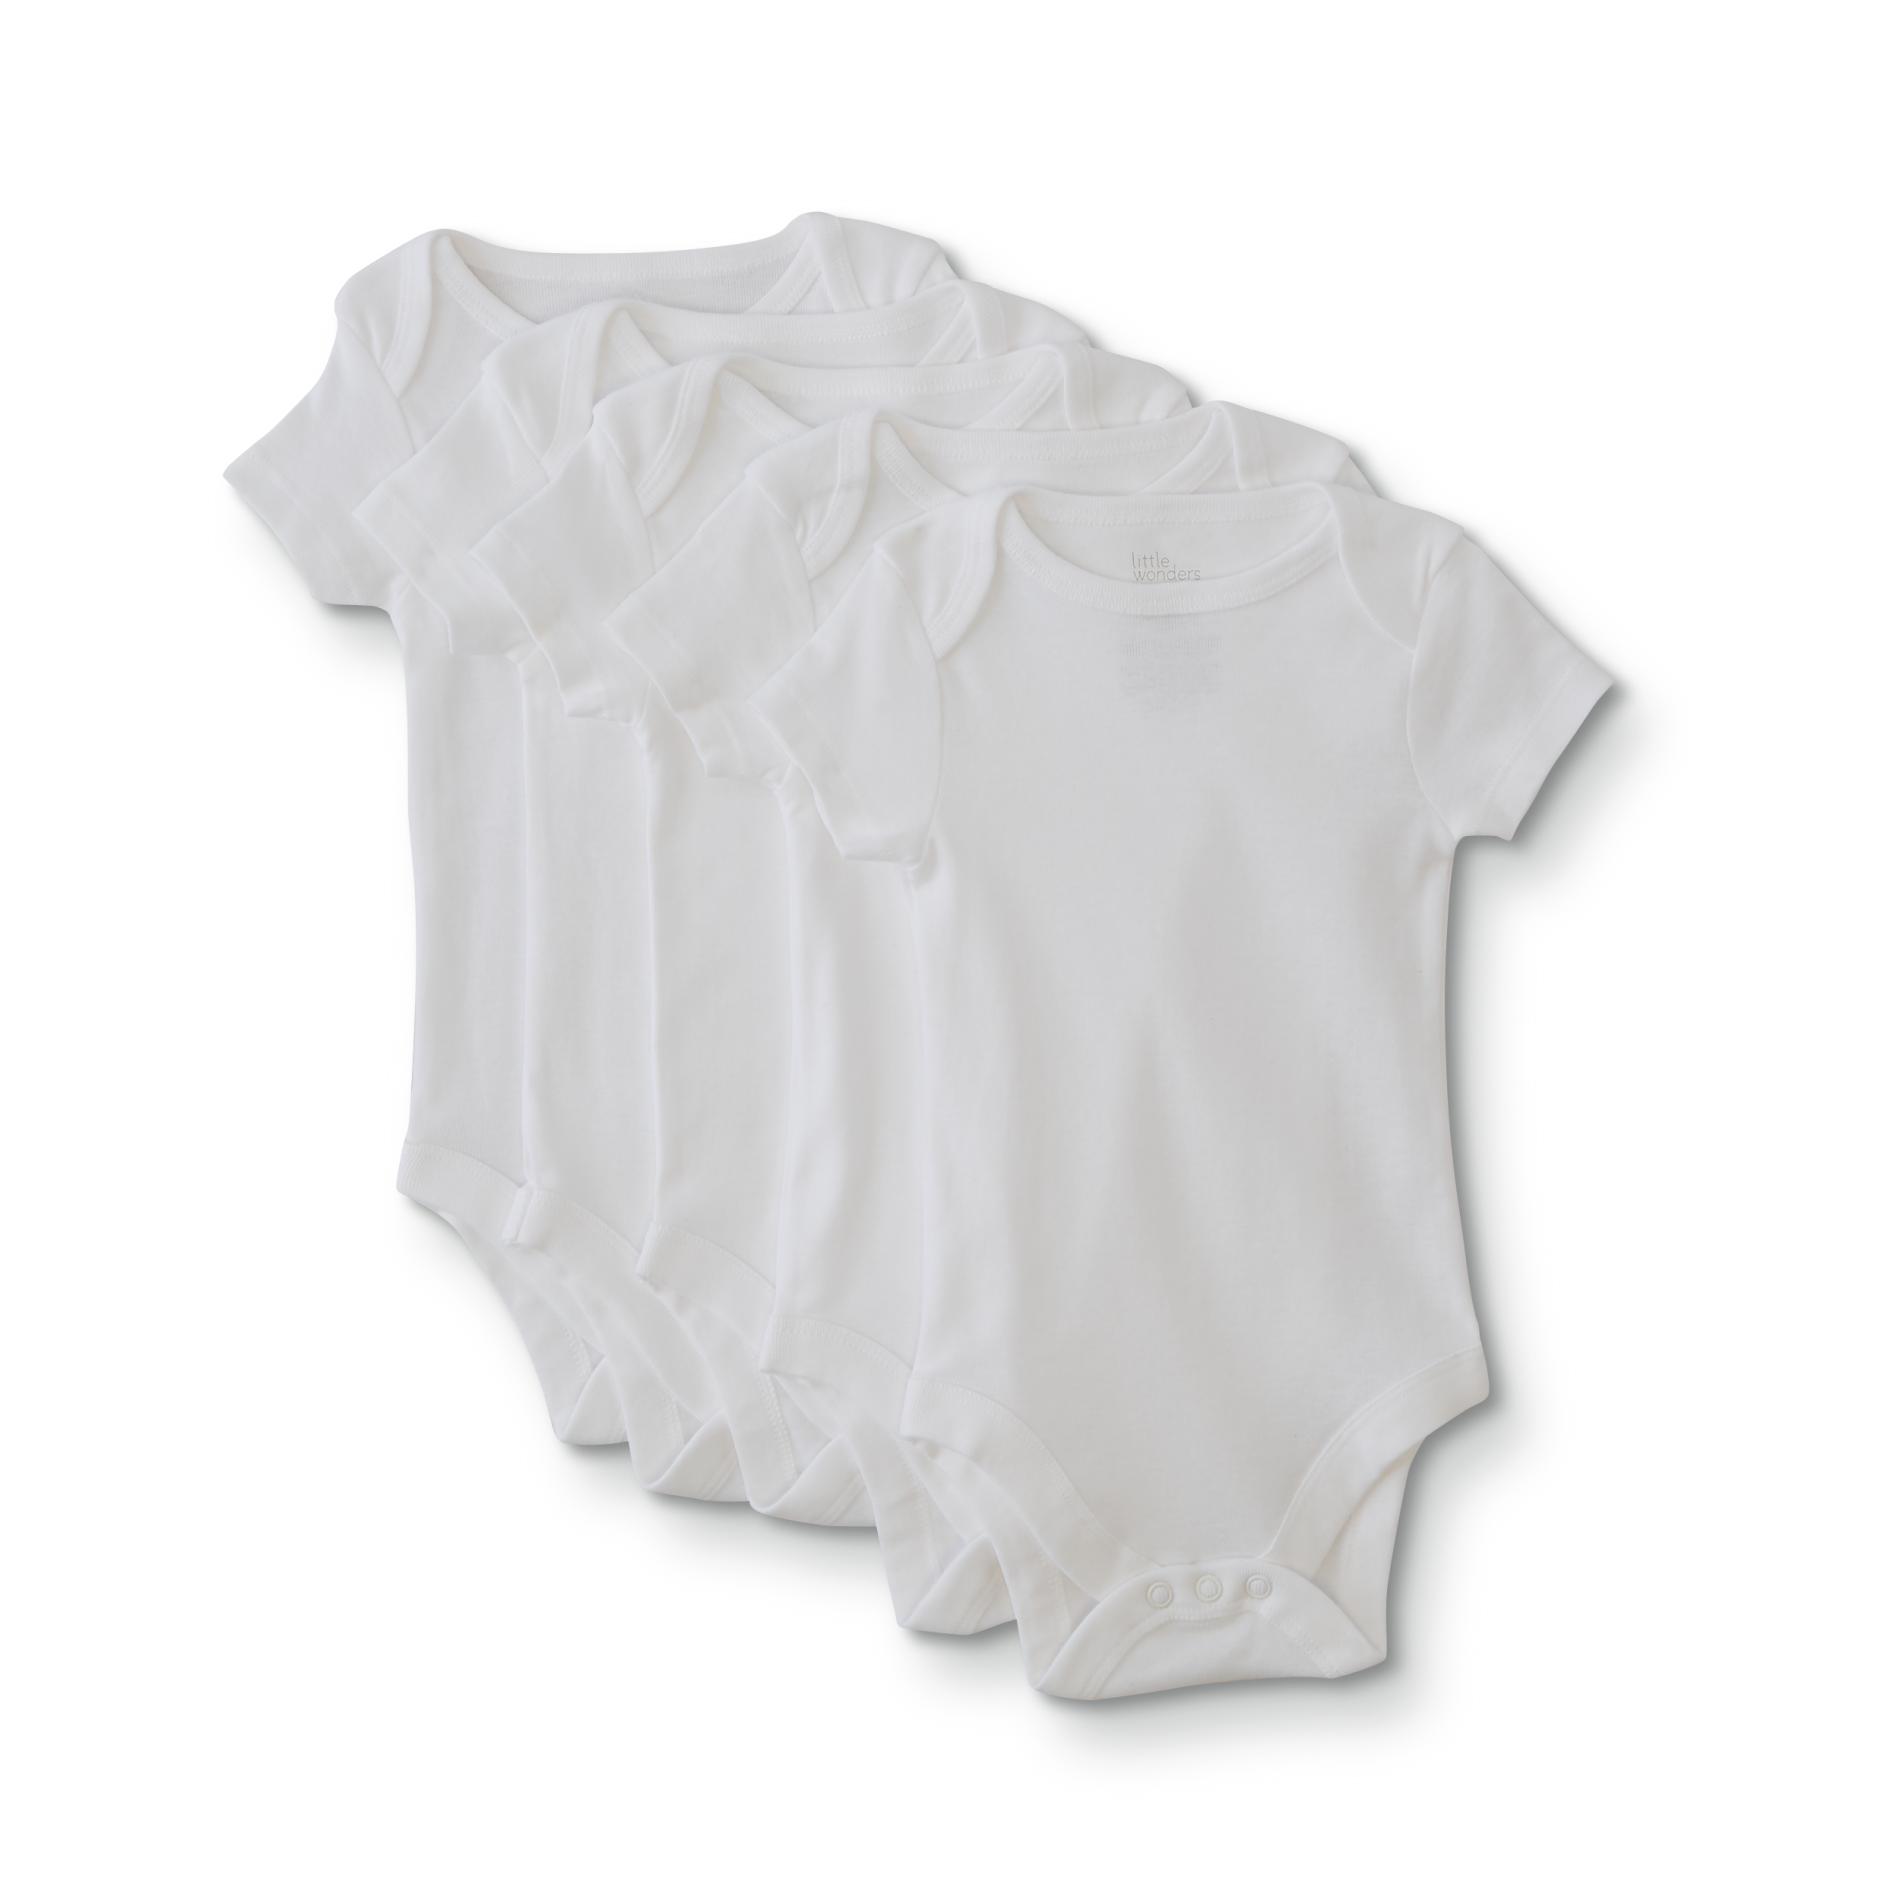 Little Wonders Infants' 5-Pack Short-Sleeve Bodysuits